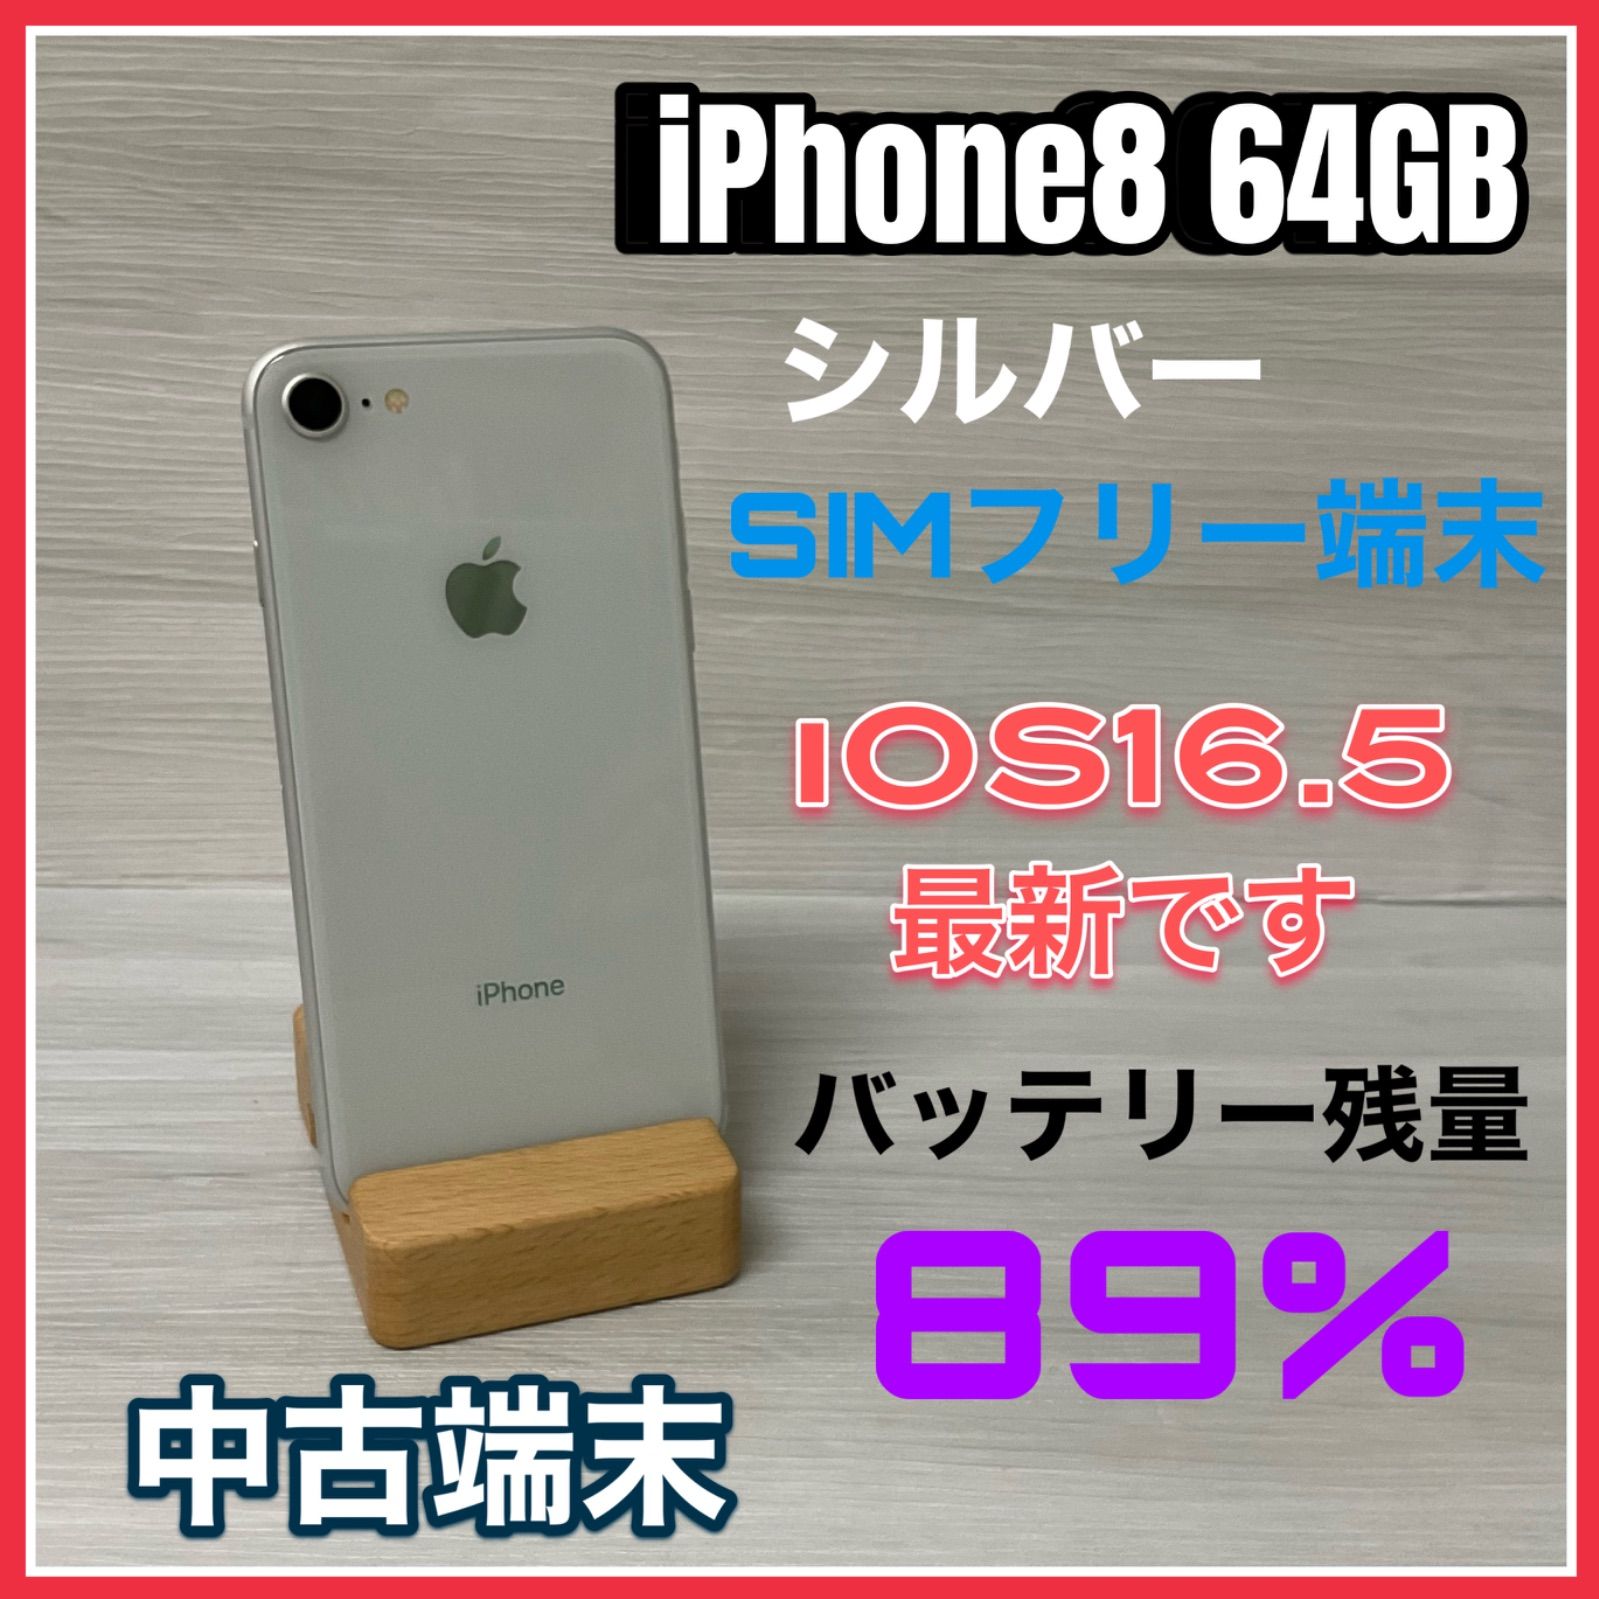 iPhone8 64GB <シルバー> 【中古】- SIMロック解除済 - - テレライン ...